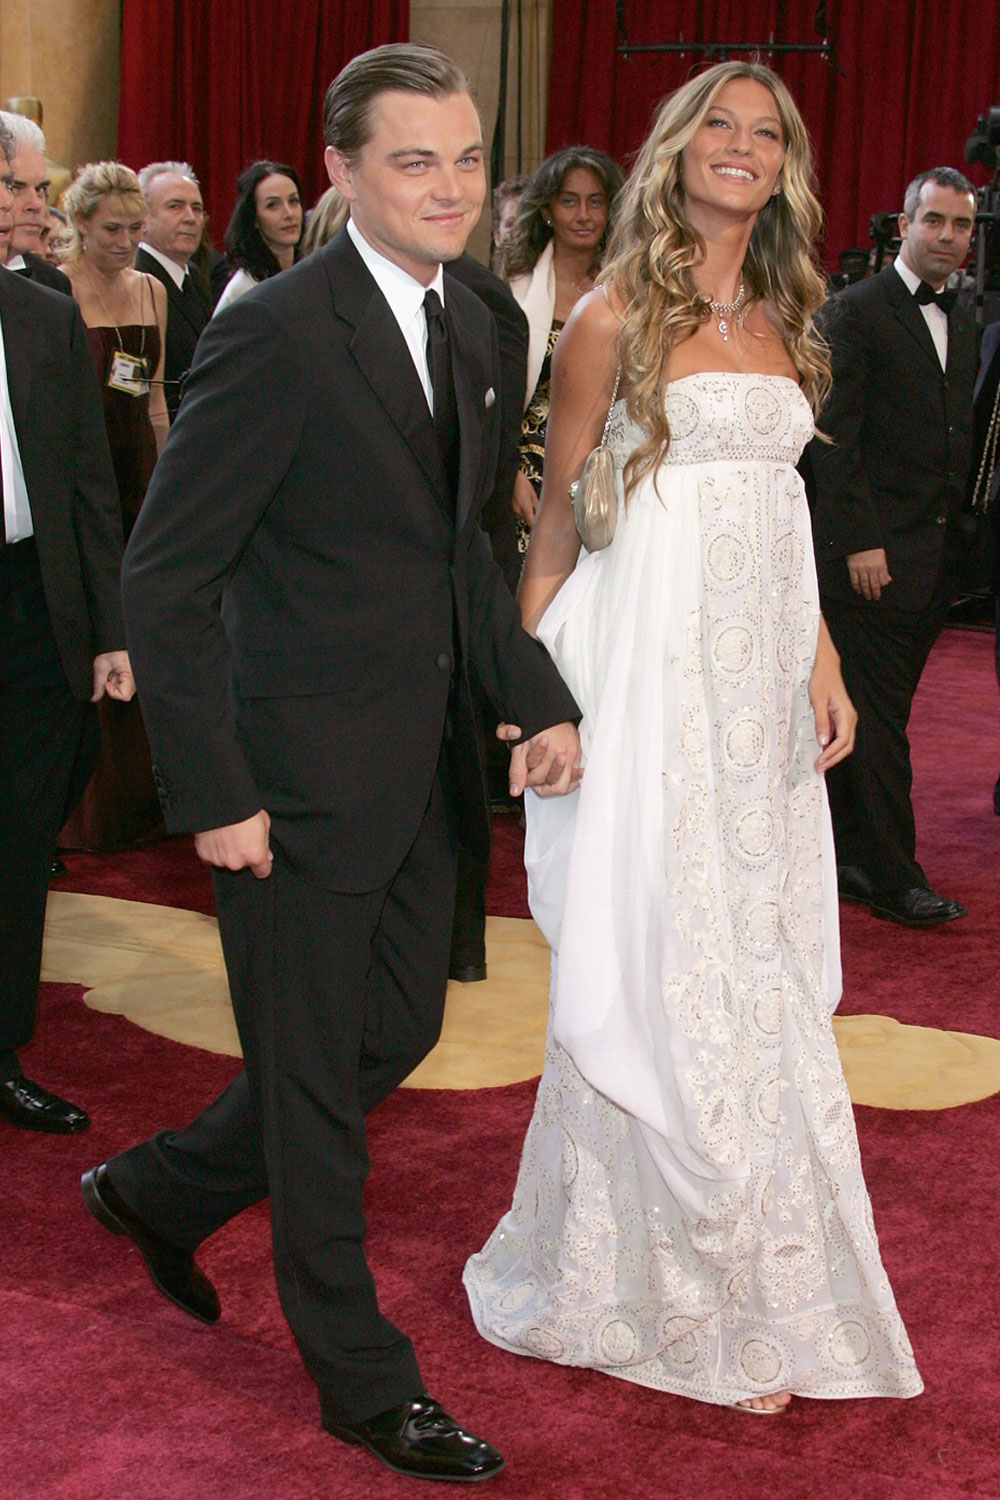 Gisele Bündchen, in Christian Dior, with Leonardo Di Caprio, at the 2005 Academy Awards.